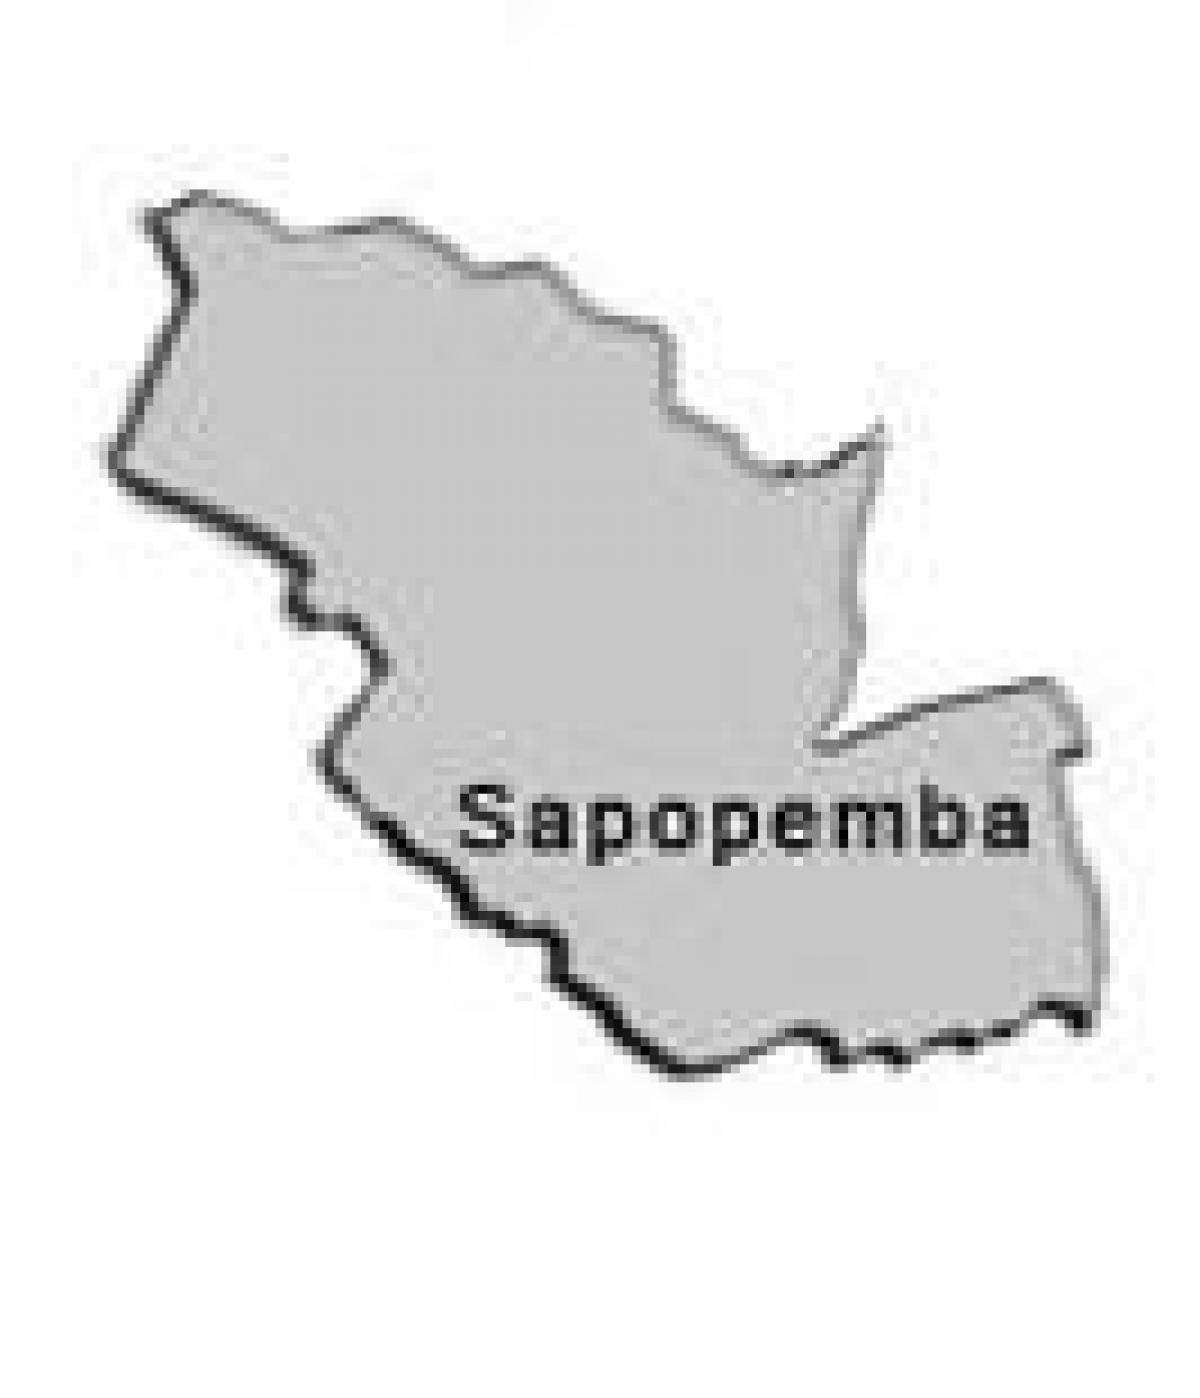 Zemljevid Sapopembra sub-prefekturi